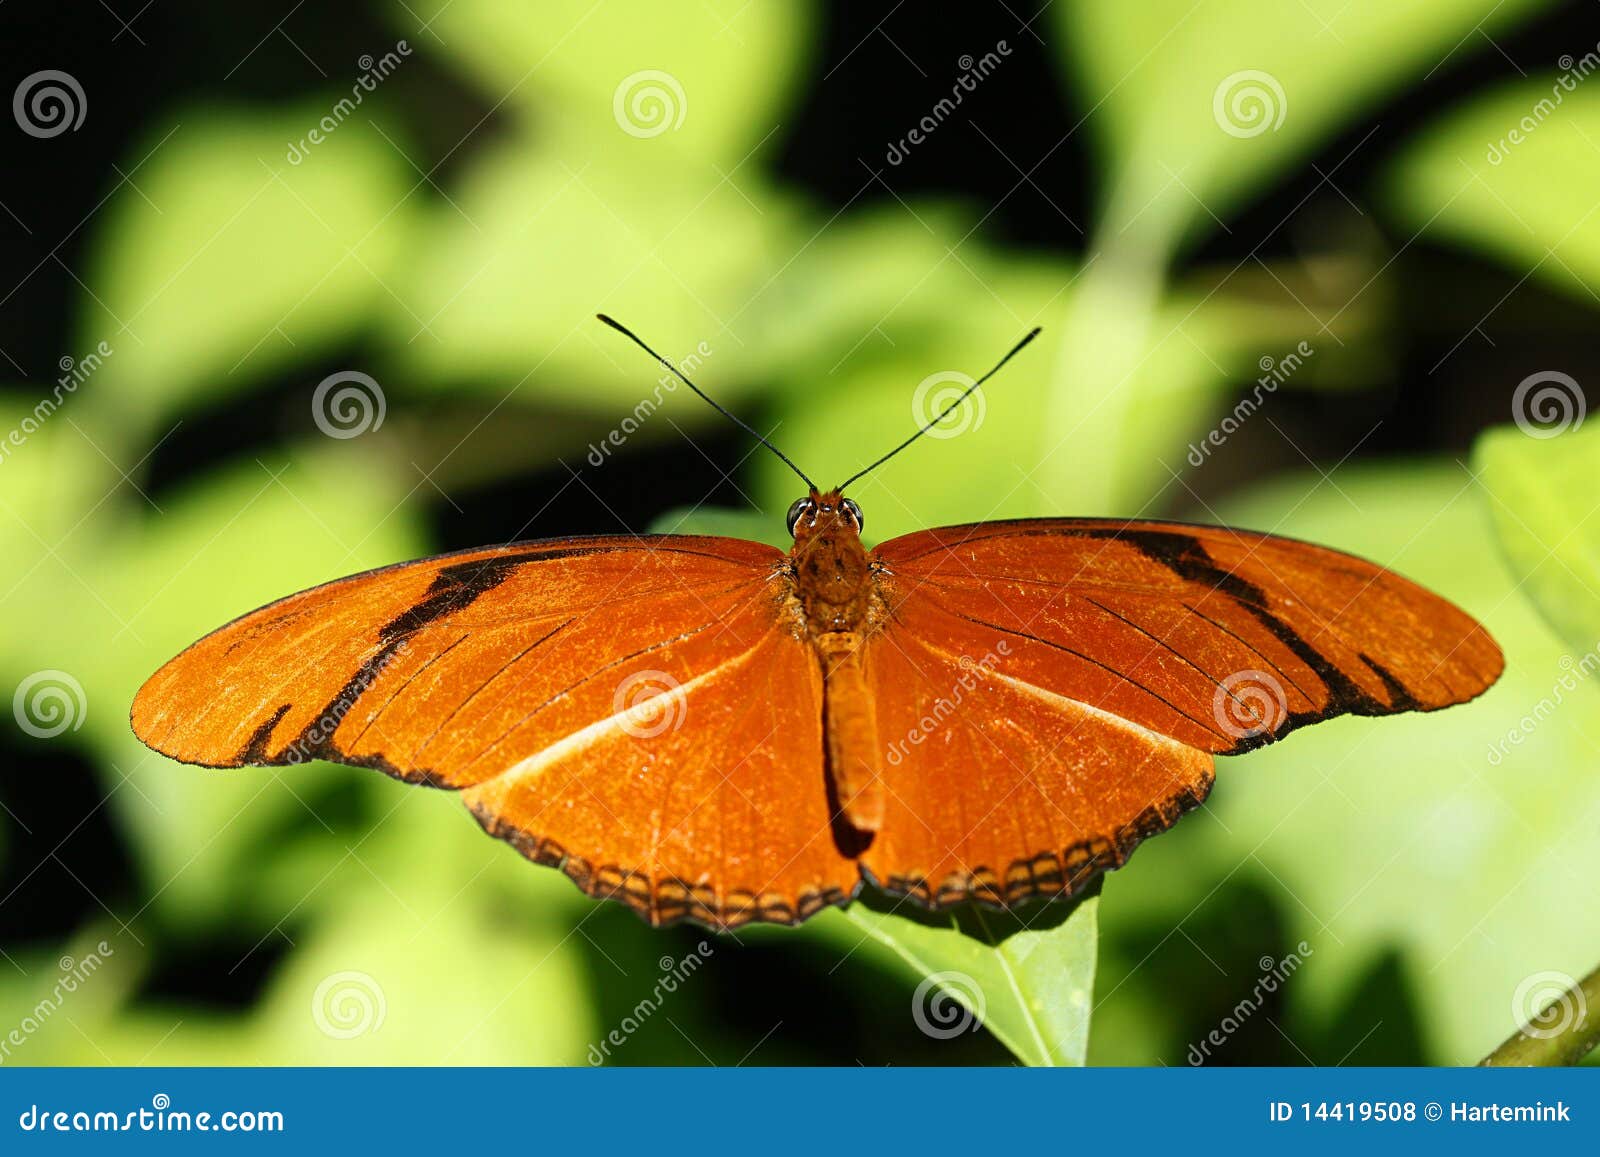 dryas iulia or julia butterfly